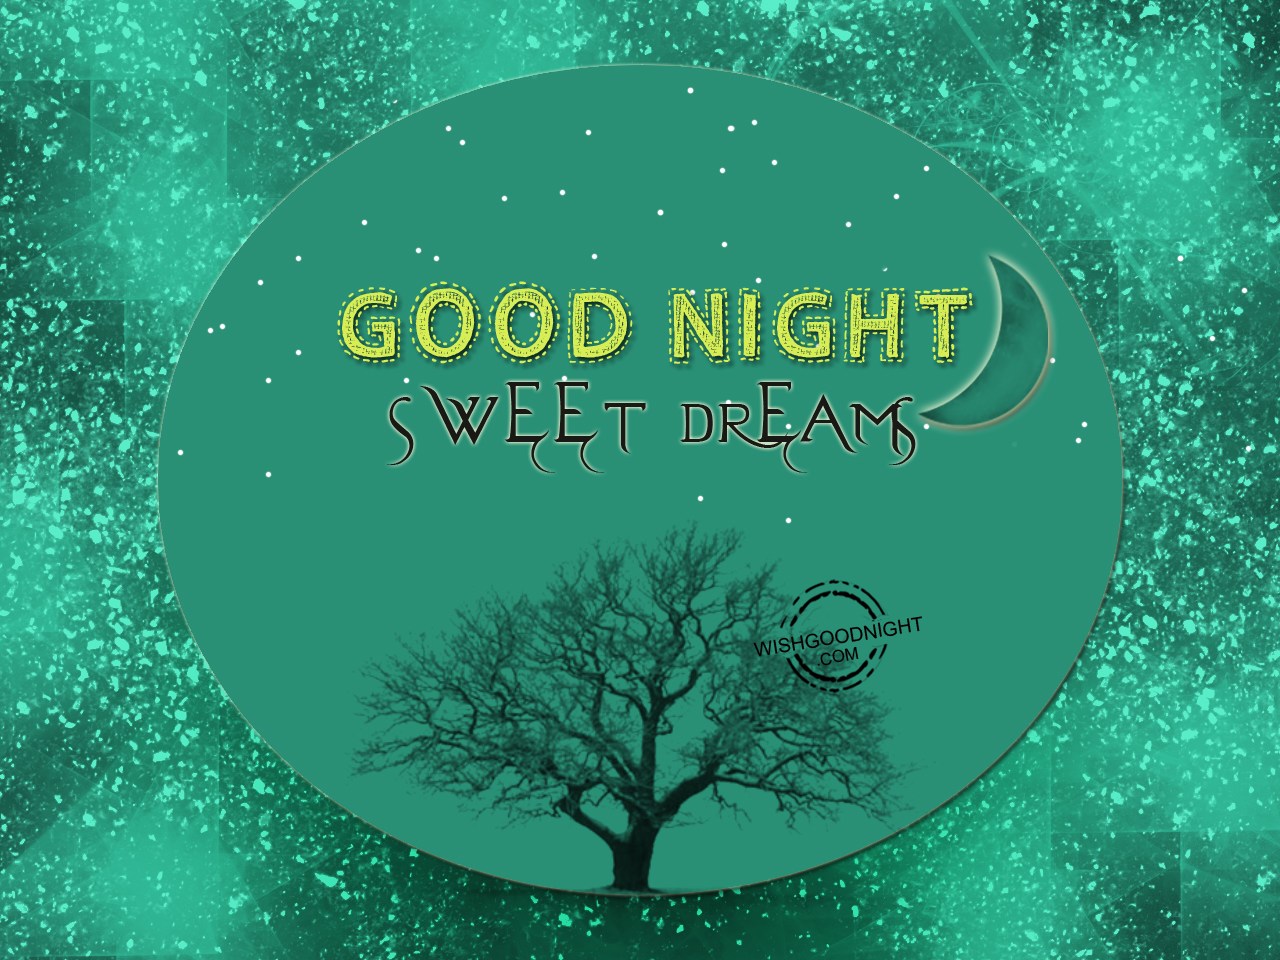 Good Night Wishes - Good Night Pictures – Wishgoodnight.com